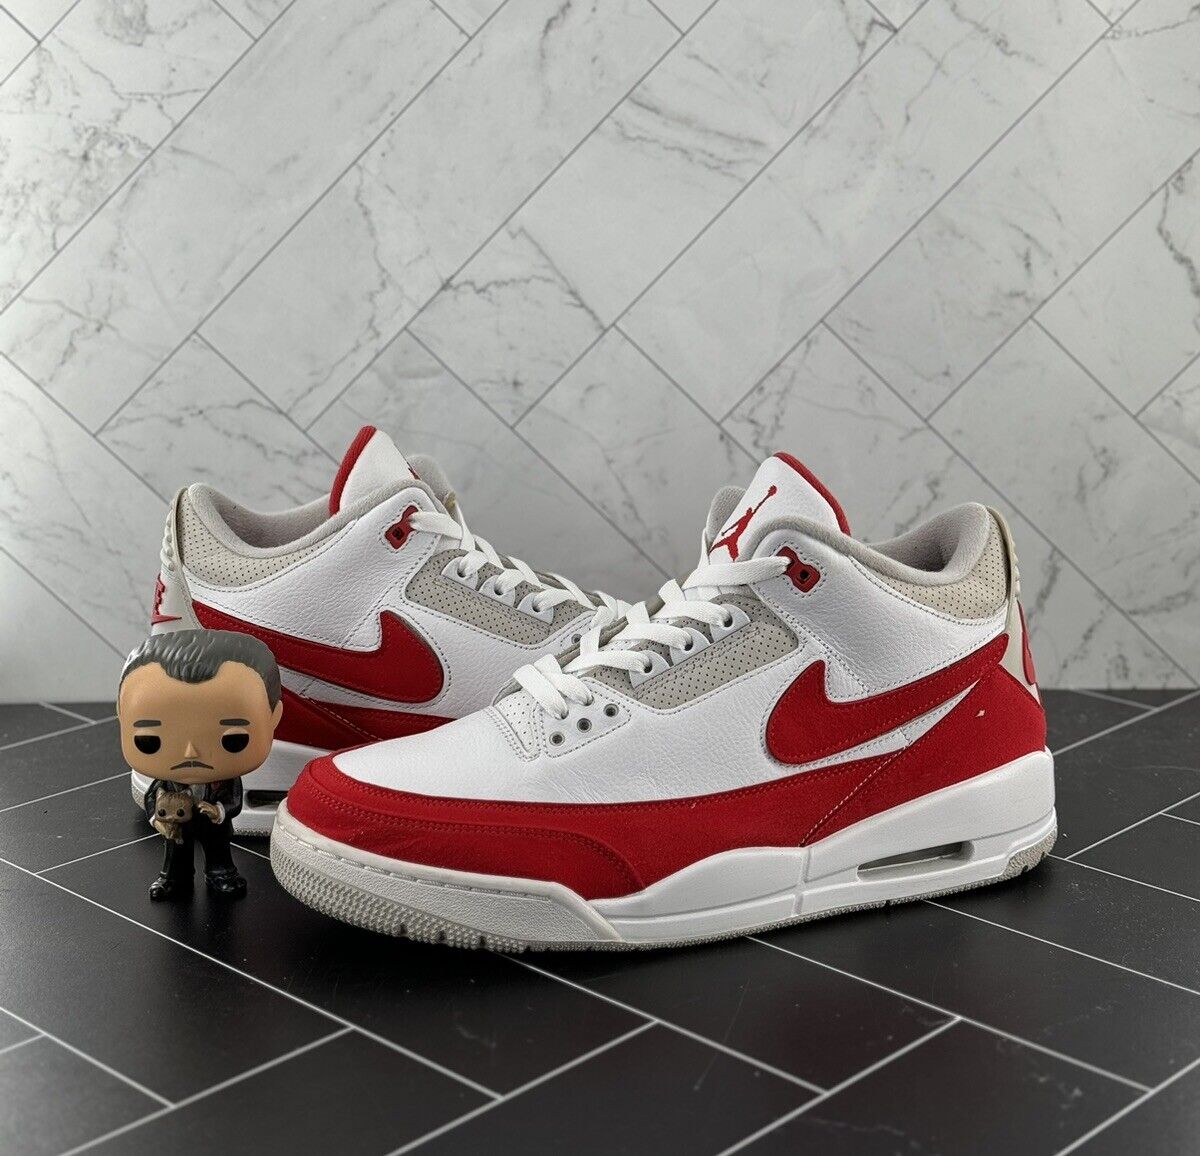 Nike Air Jordan 3 Retro Tinker Air Max 1 2019 Size 12 CJ0939-100 White Red Black